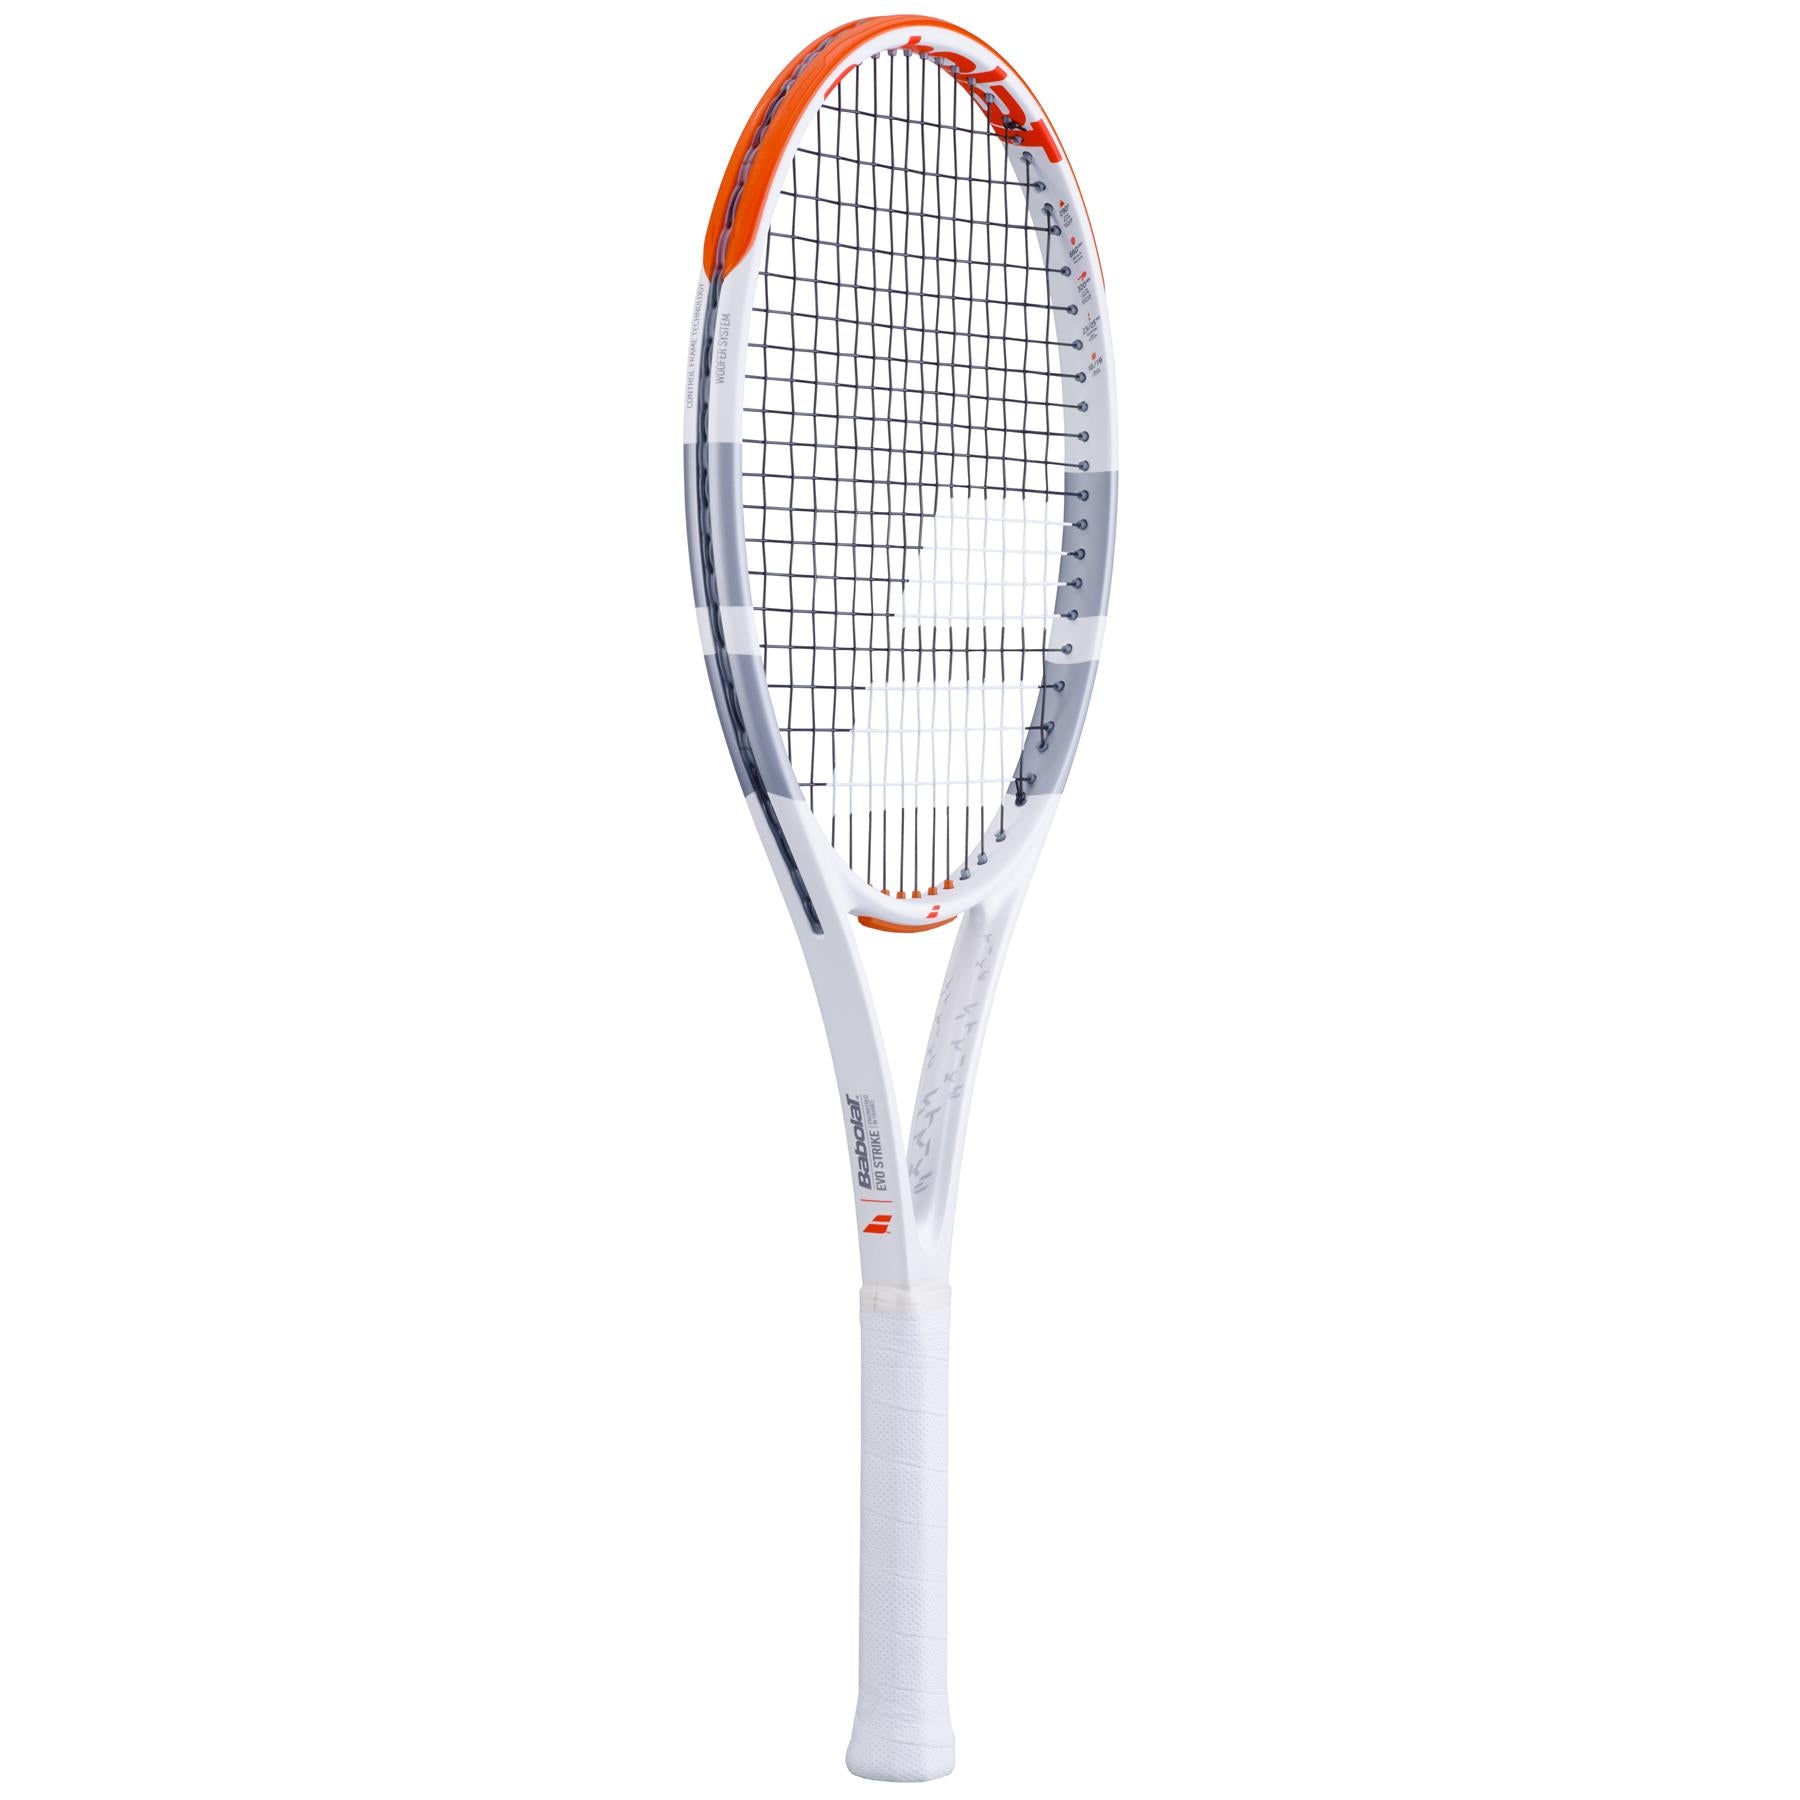 Babolat Evo Strike Gen 2 Tennis Racket - White / Red / Grey (Strung) - Right